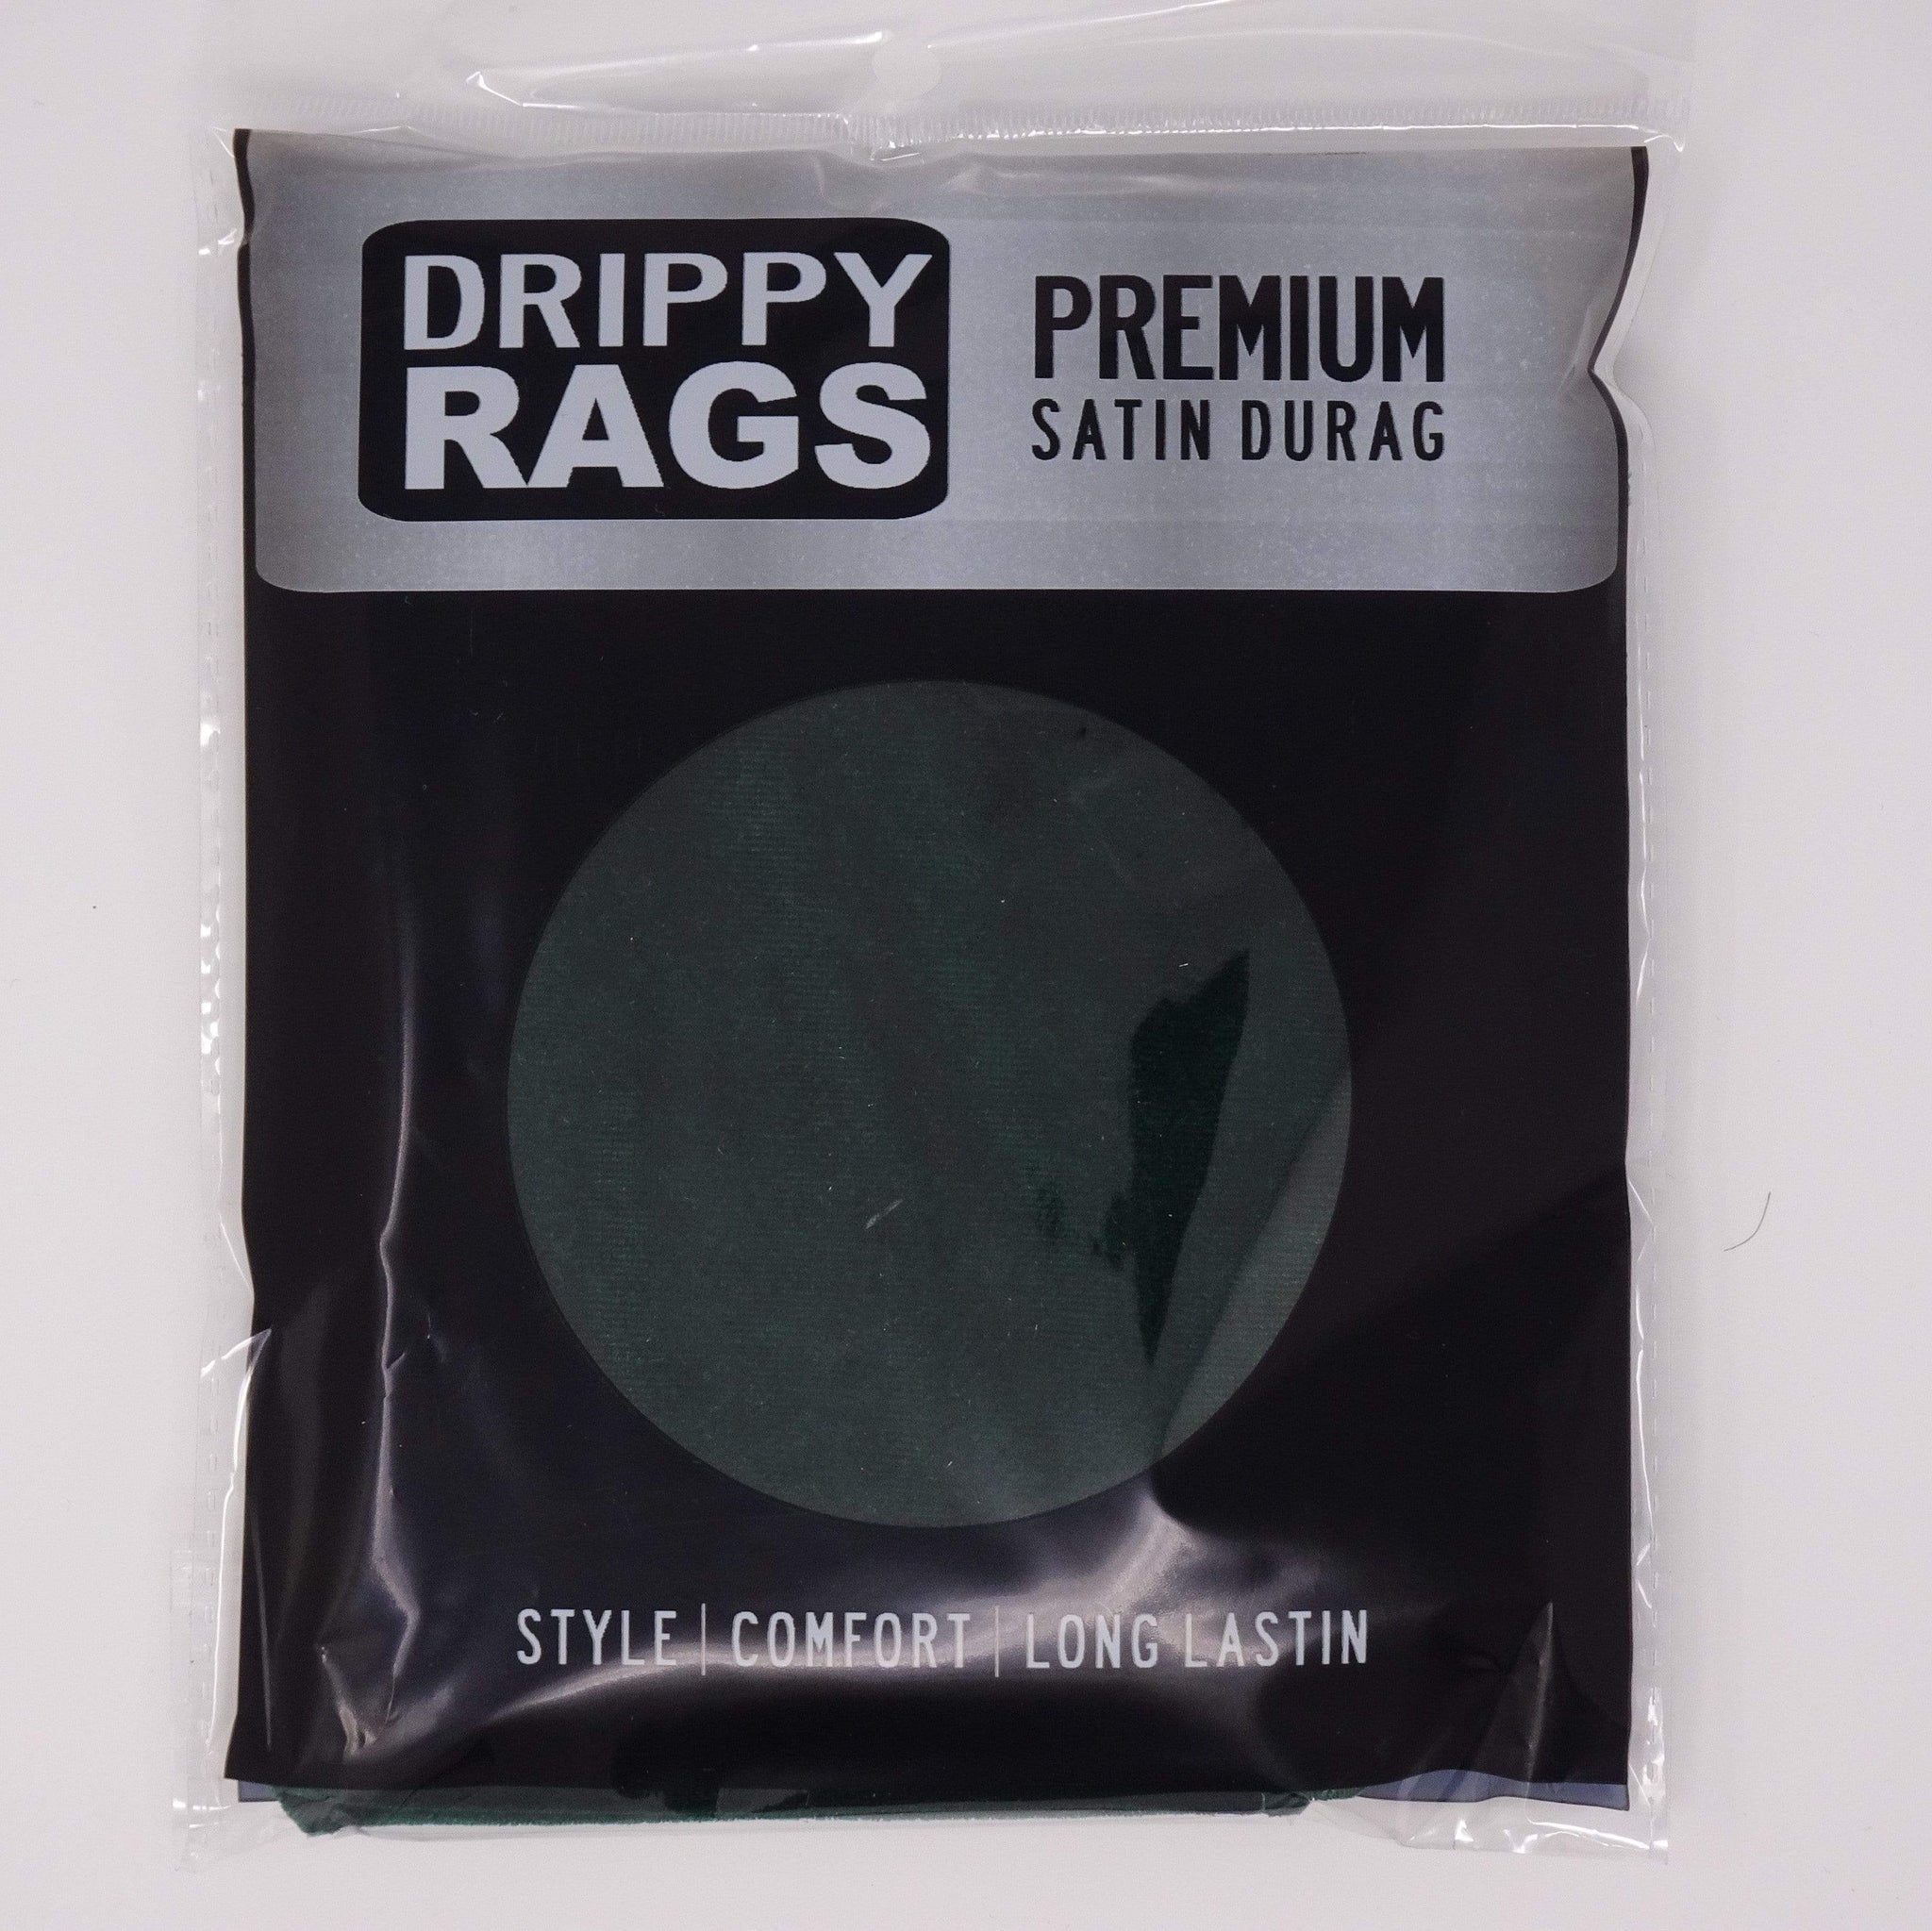 Premium Black Silky Durag, Drippy Rags